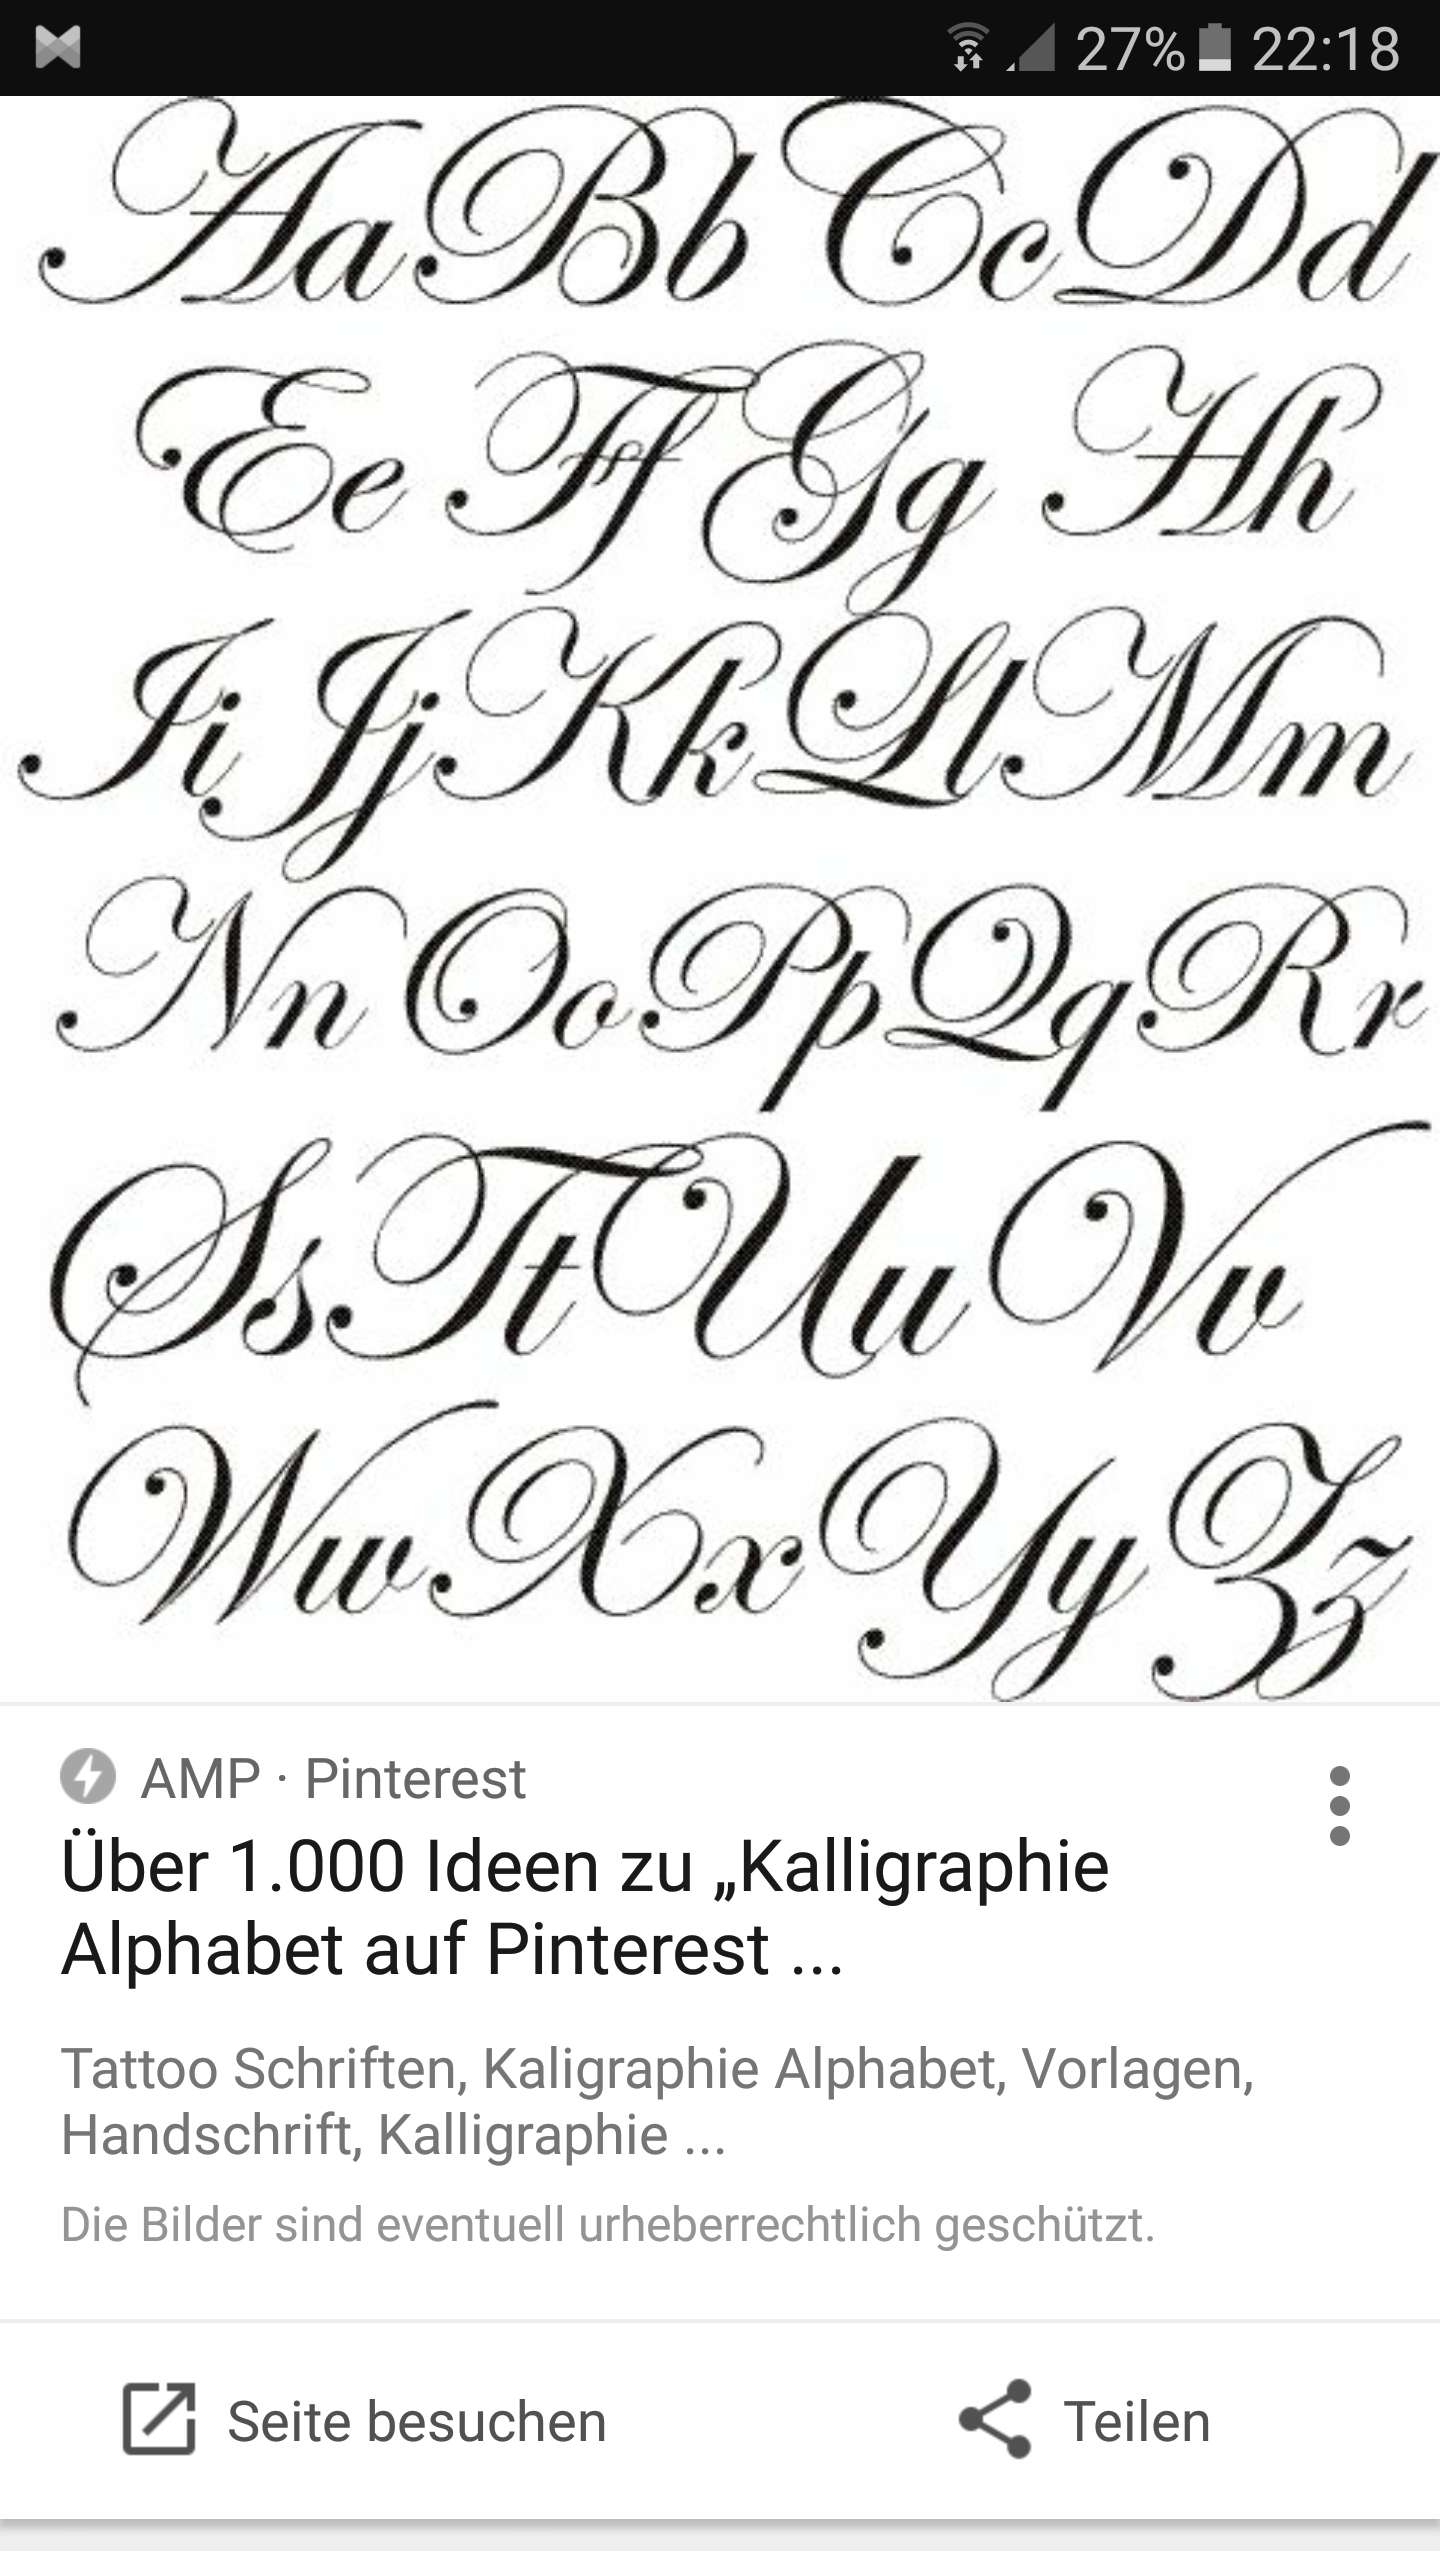 Kalligraphie Schriftzug? (Schreiben, Schrift, Füller)